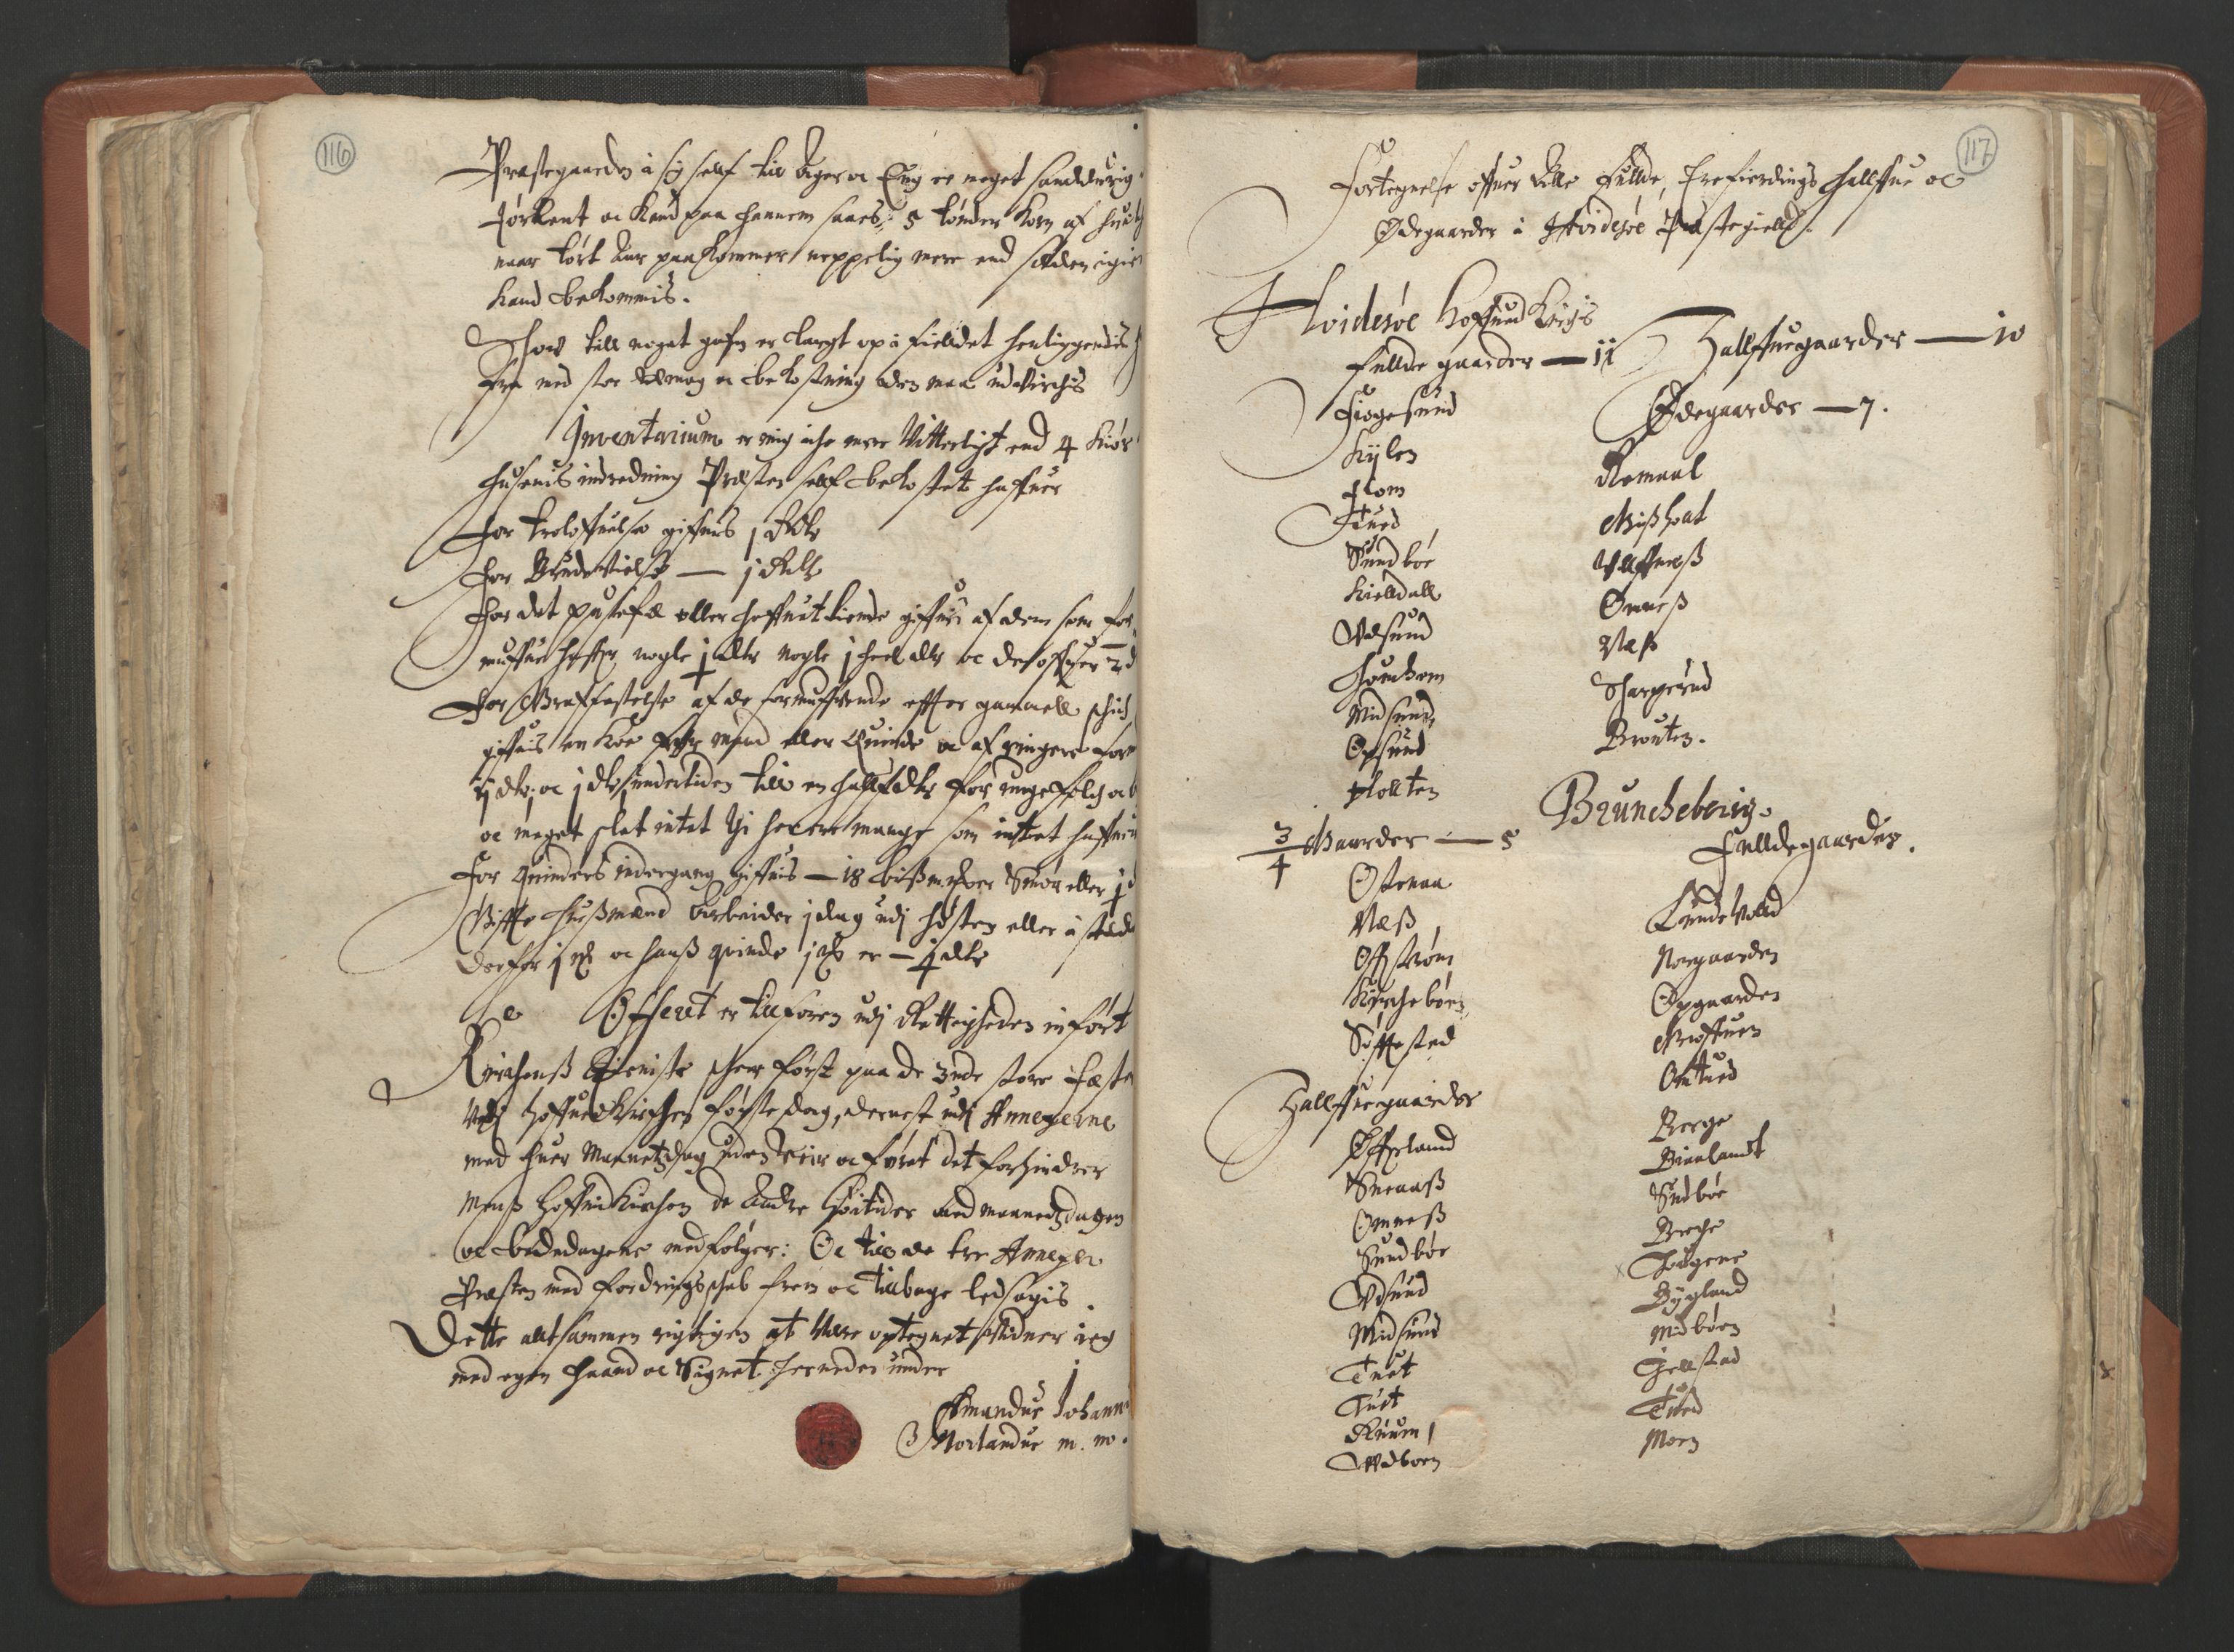 RA, Vicar's Census 1664-1666, no. 12: Øvre Telemark deanery, Nedre Telemark deanery and Bamble deanery, 1664-1666, p. 116-117